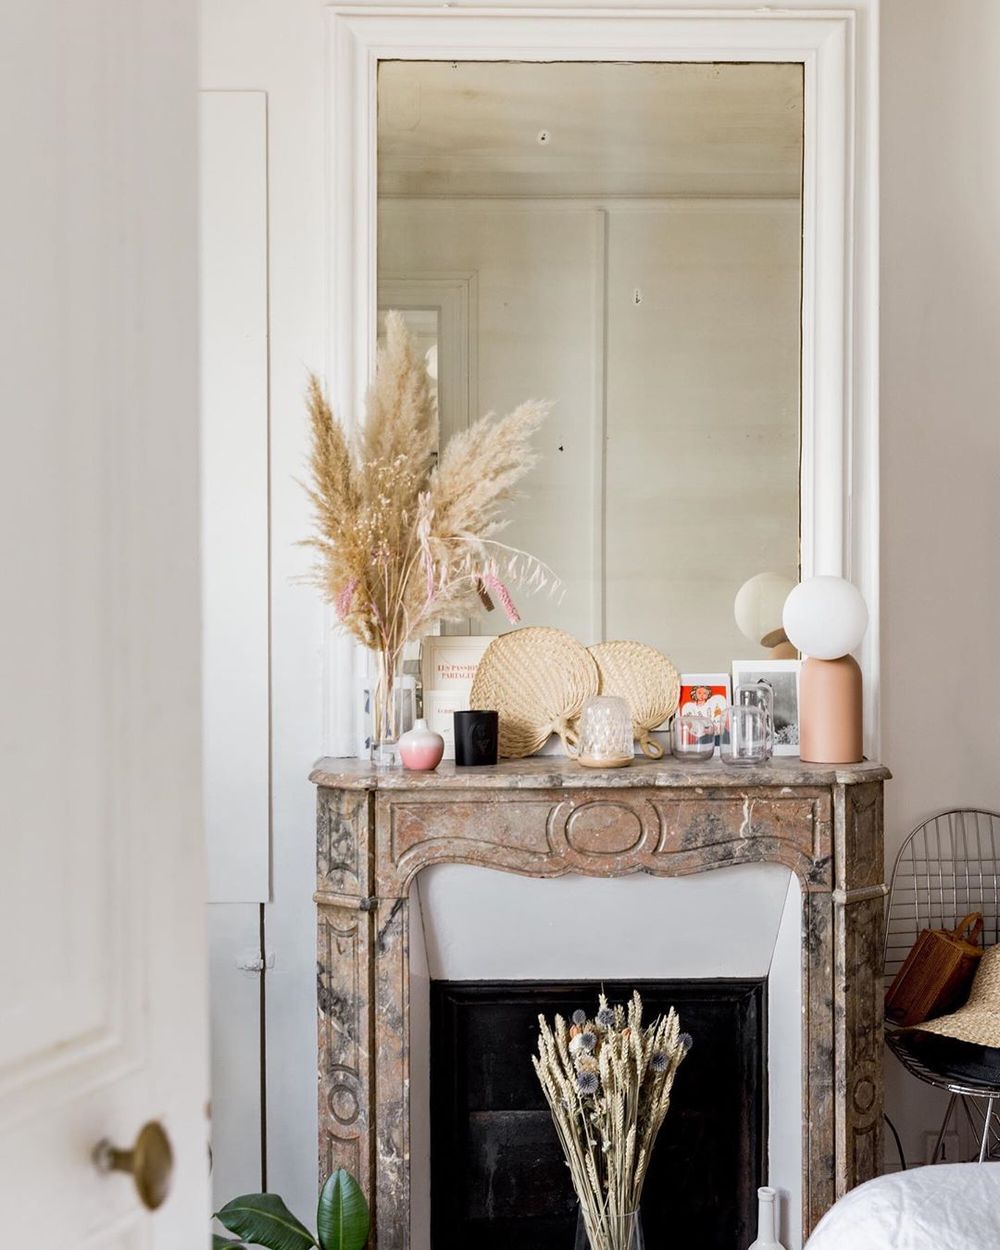 Parisian fireplace via @ruerodier